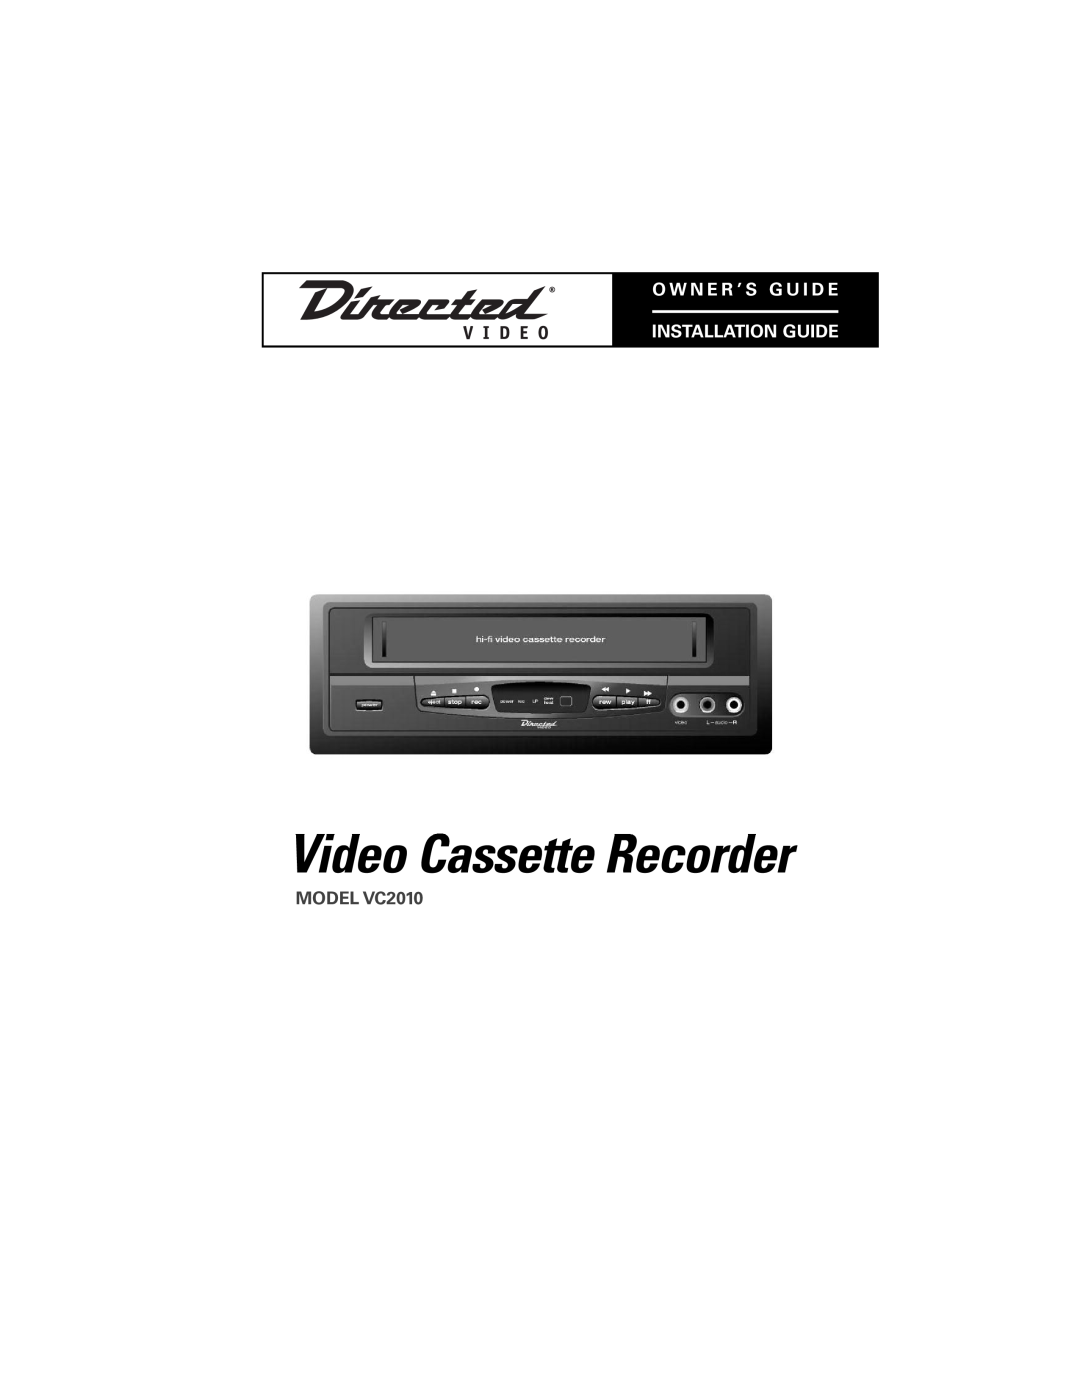 Directed Electronics manual MODEL VC2010, Video Cassette Recorder, O W N E R ’ S G U I D E Installation Guide 